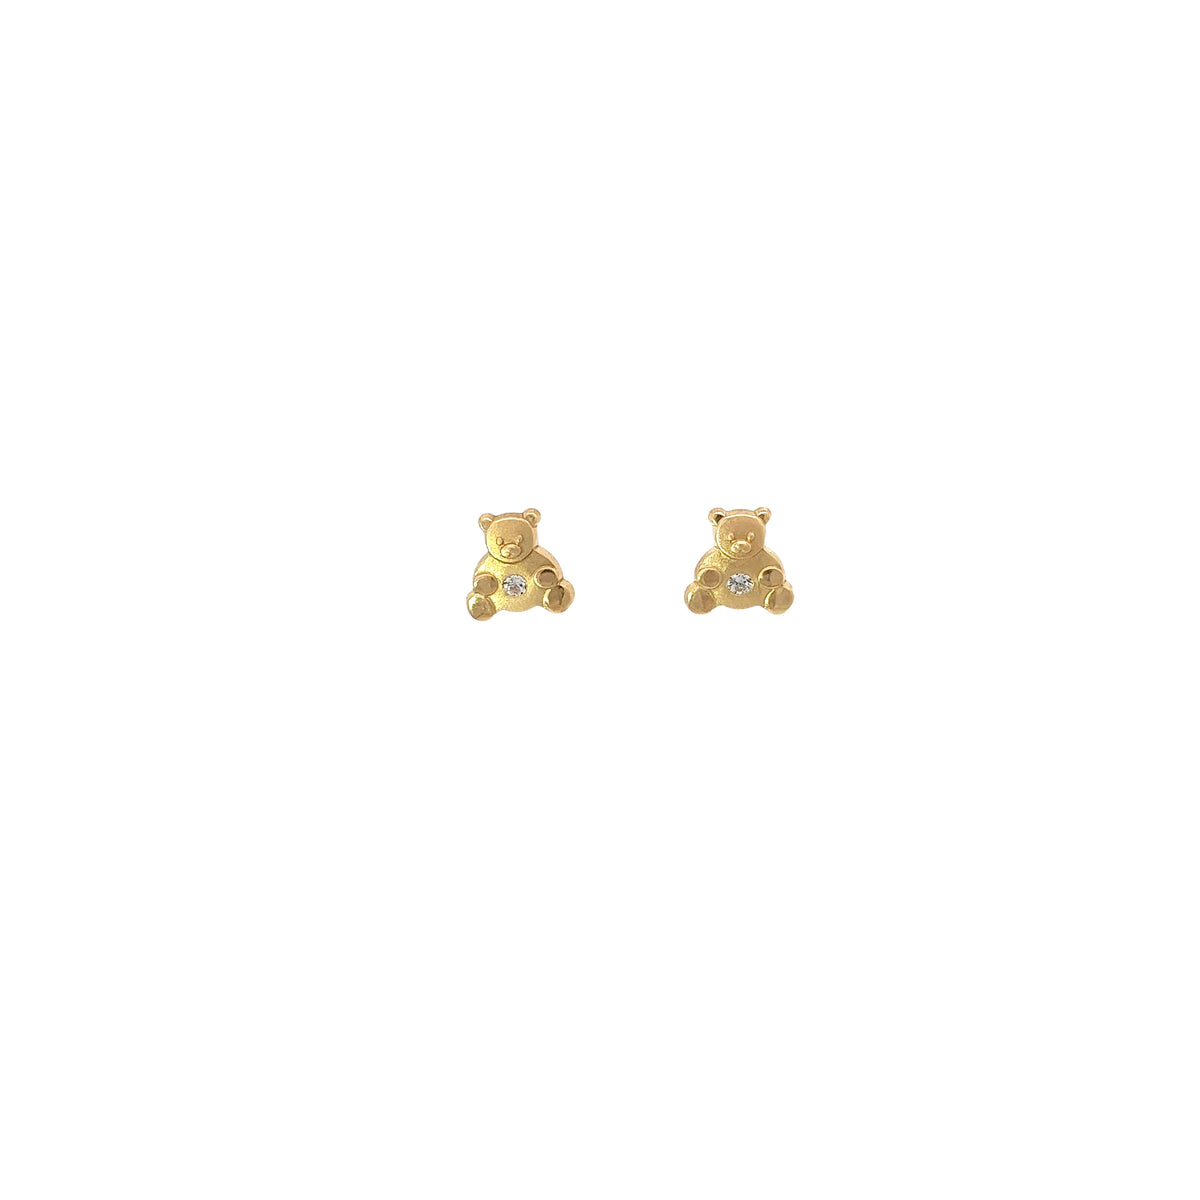 Baby 14k yellow gold Teddy bear earrings with CZ